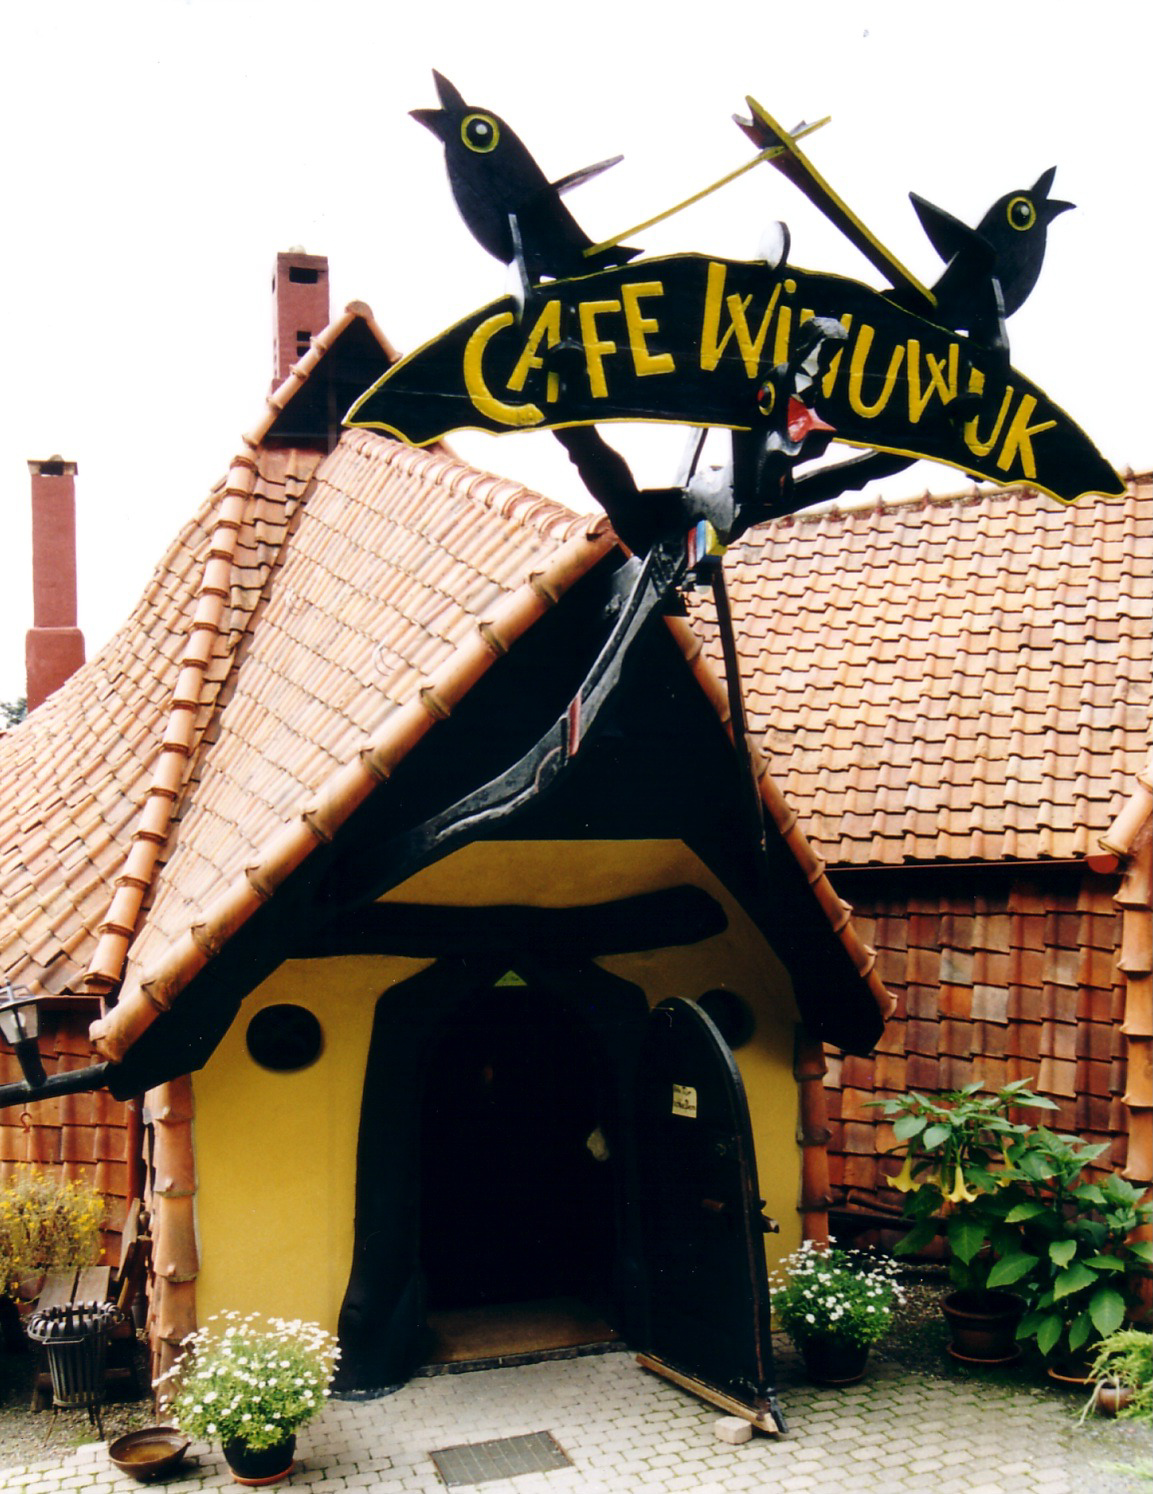 Cafe Winuwuk in Bad Harzburg